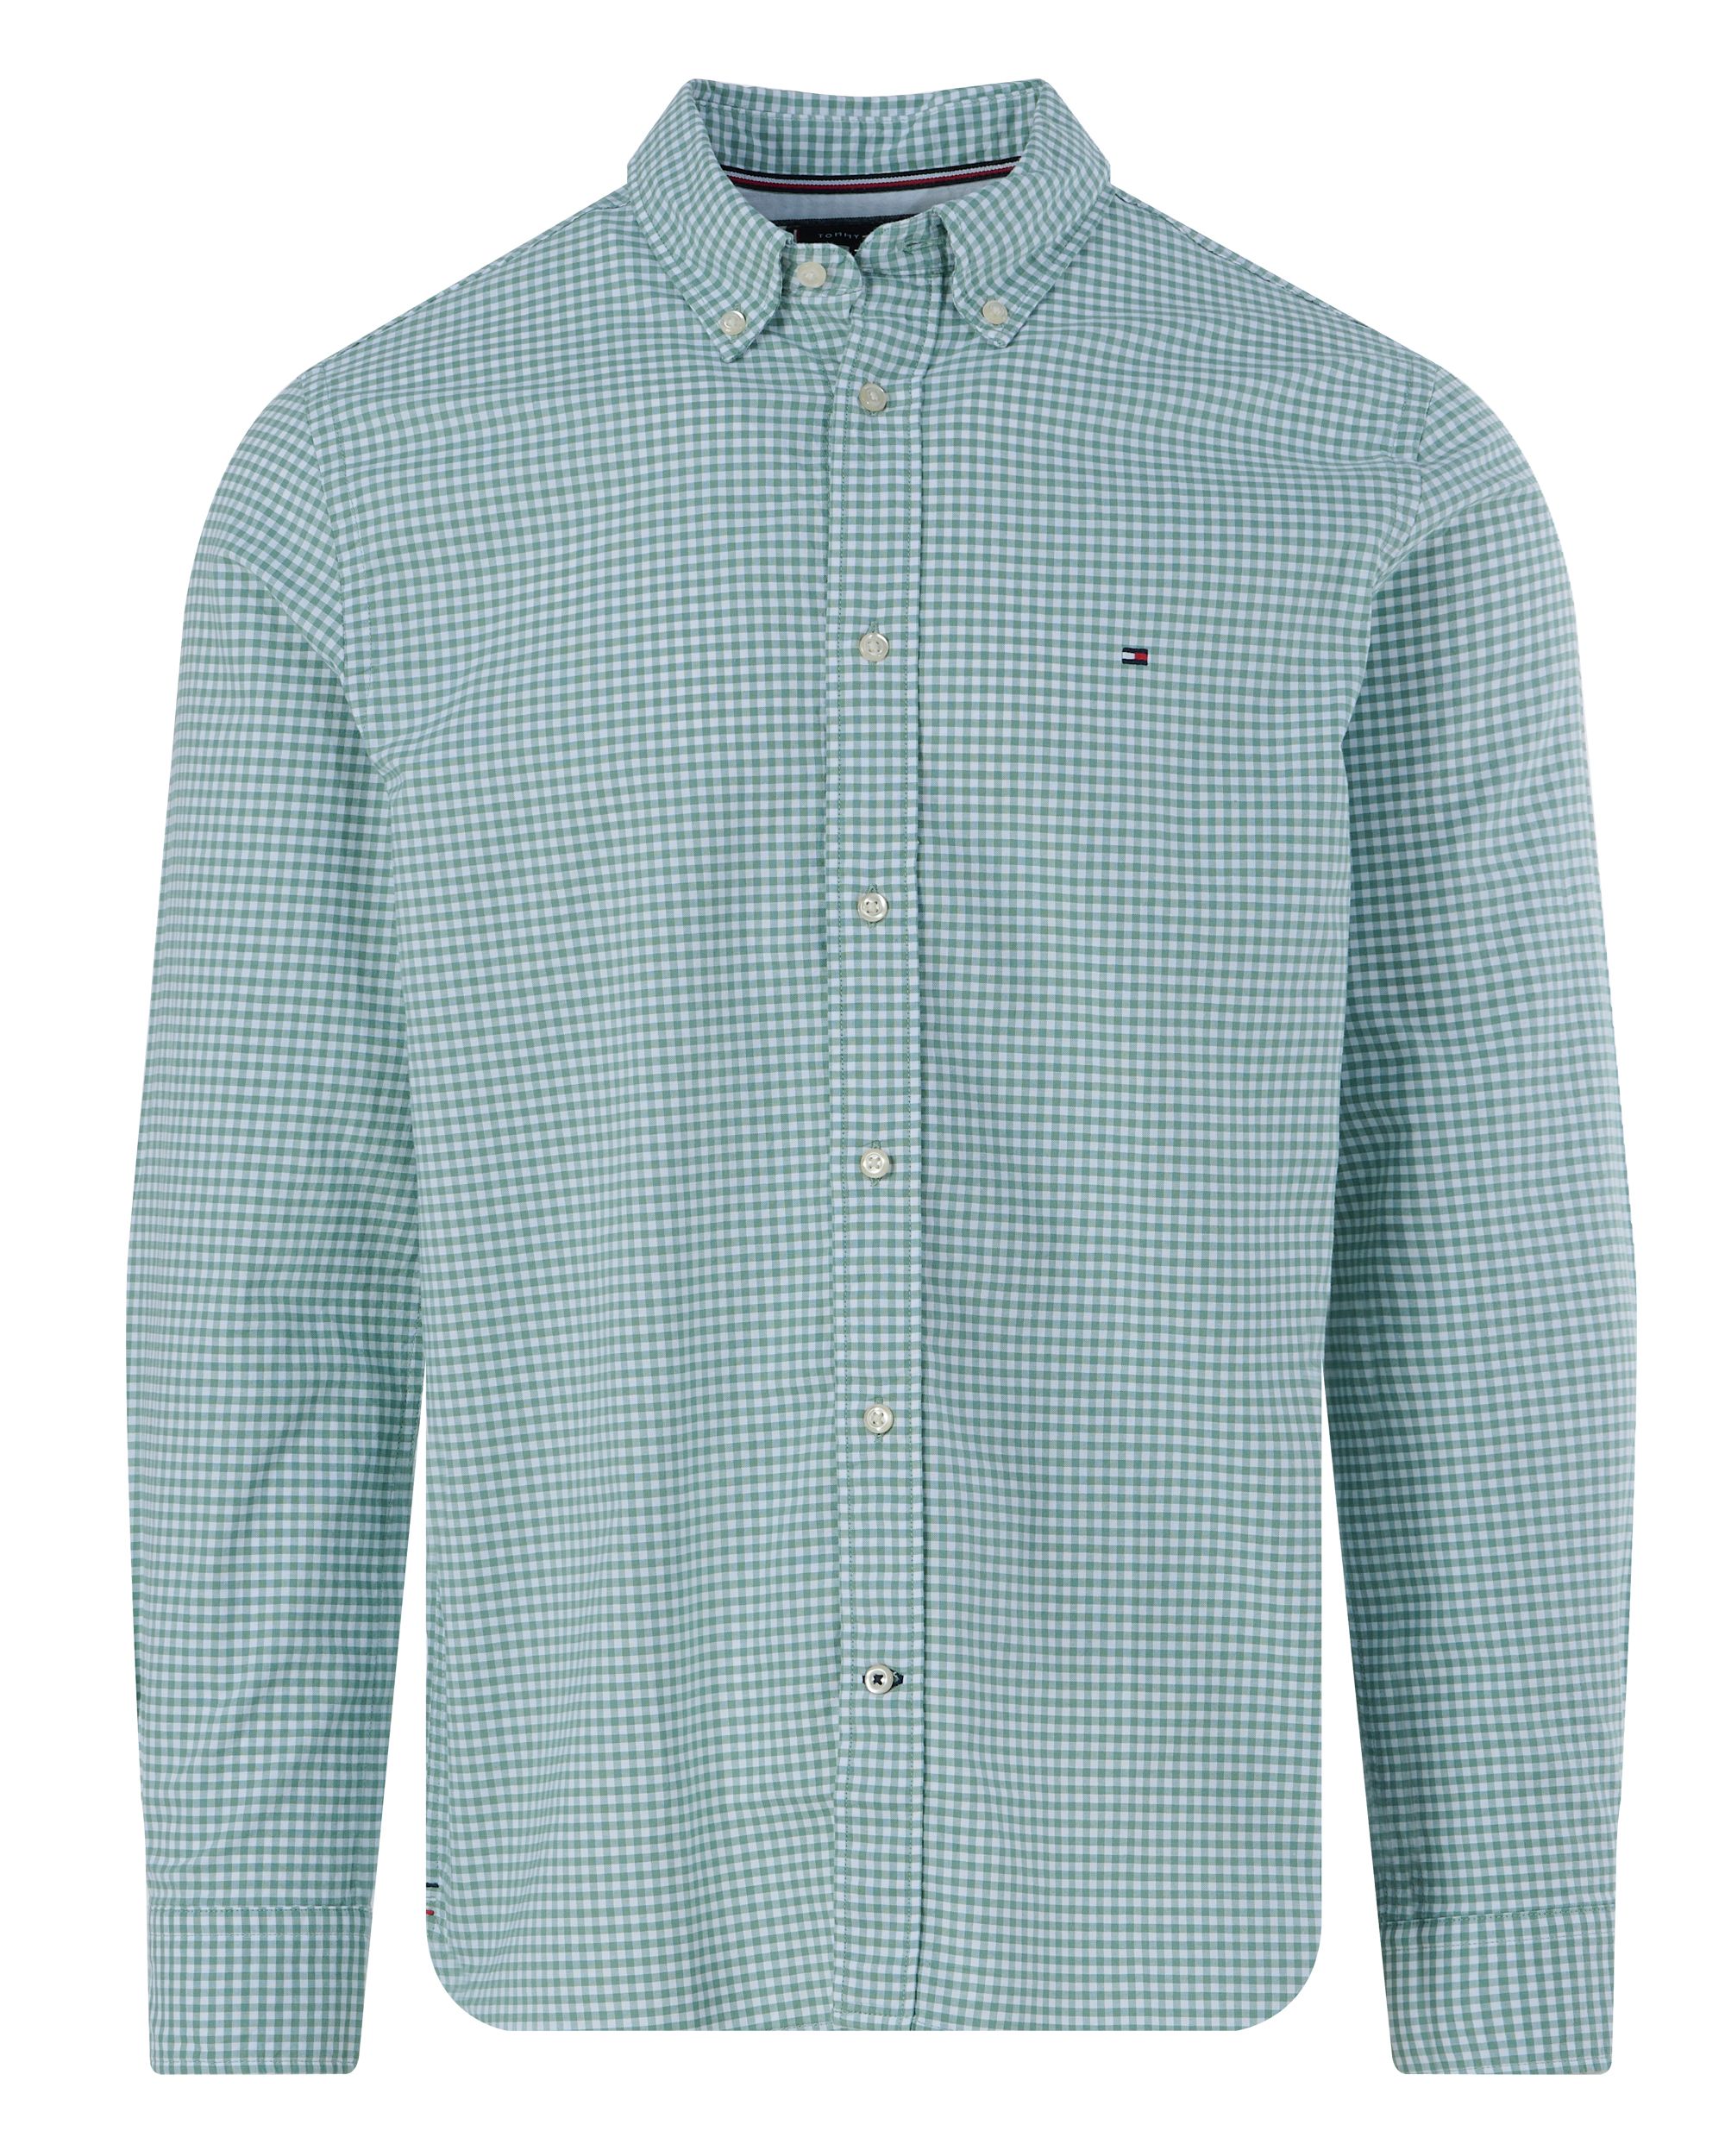 Tommy Hilfiger Menswear Casual Overhemd LM NVT 093014-001-L